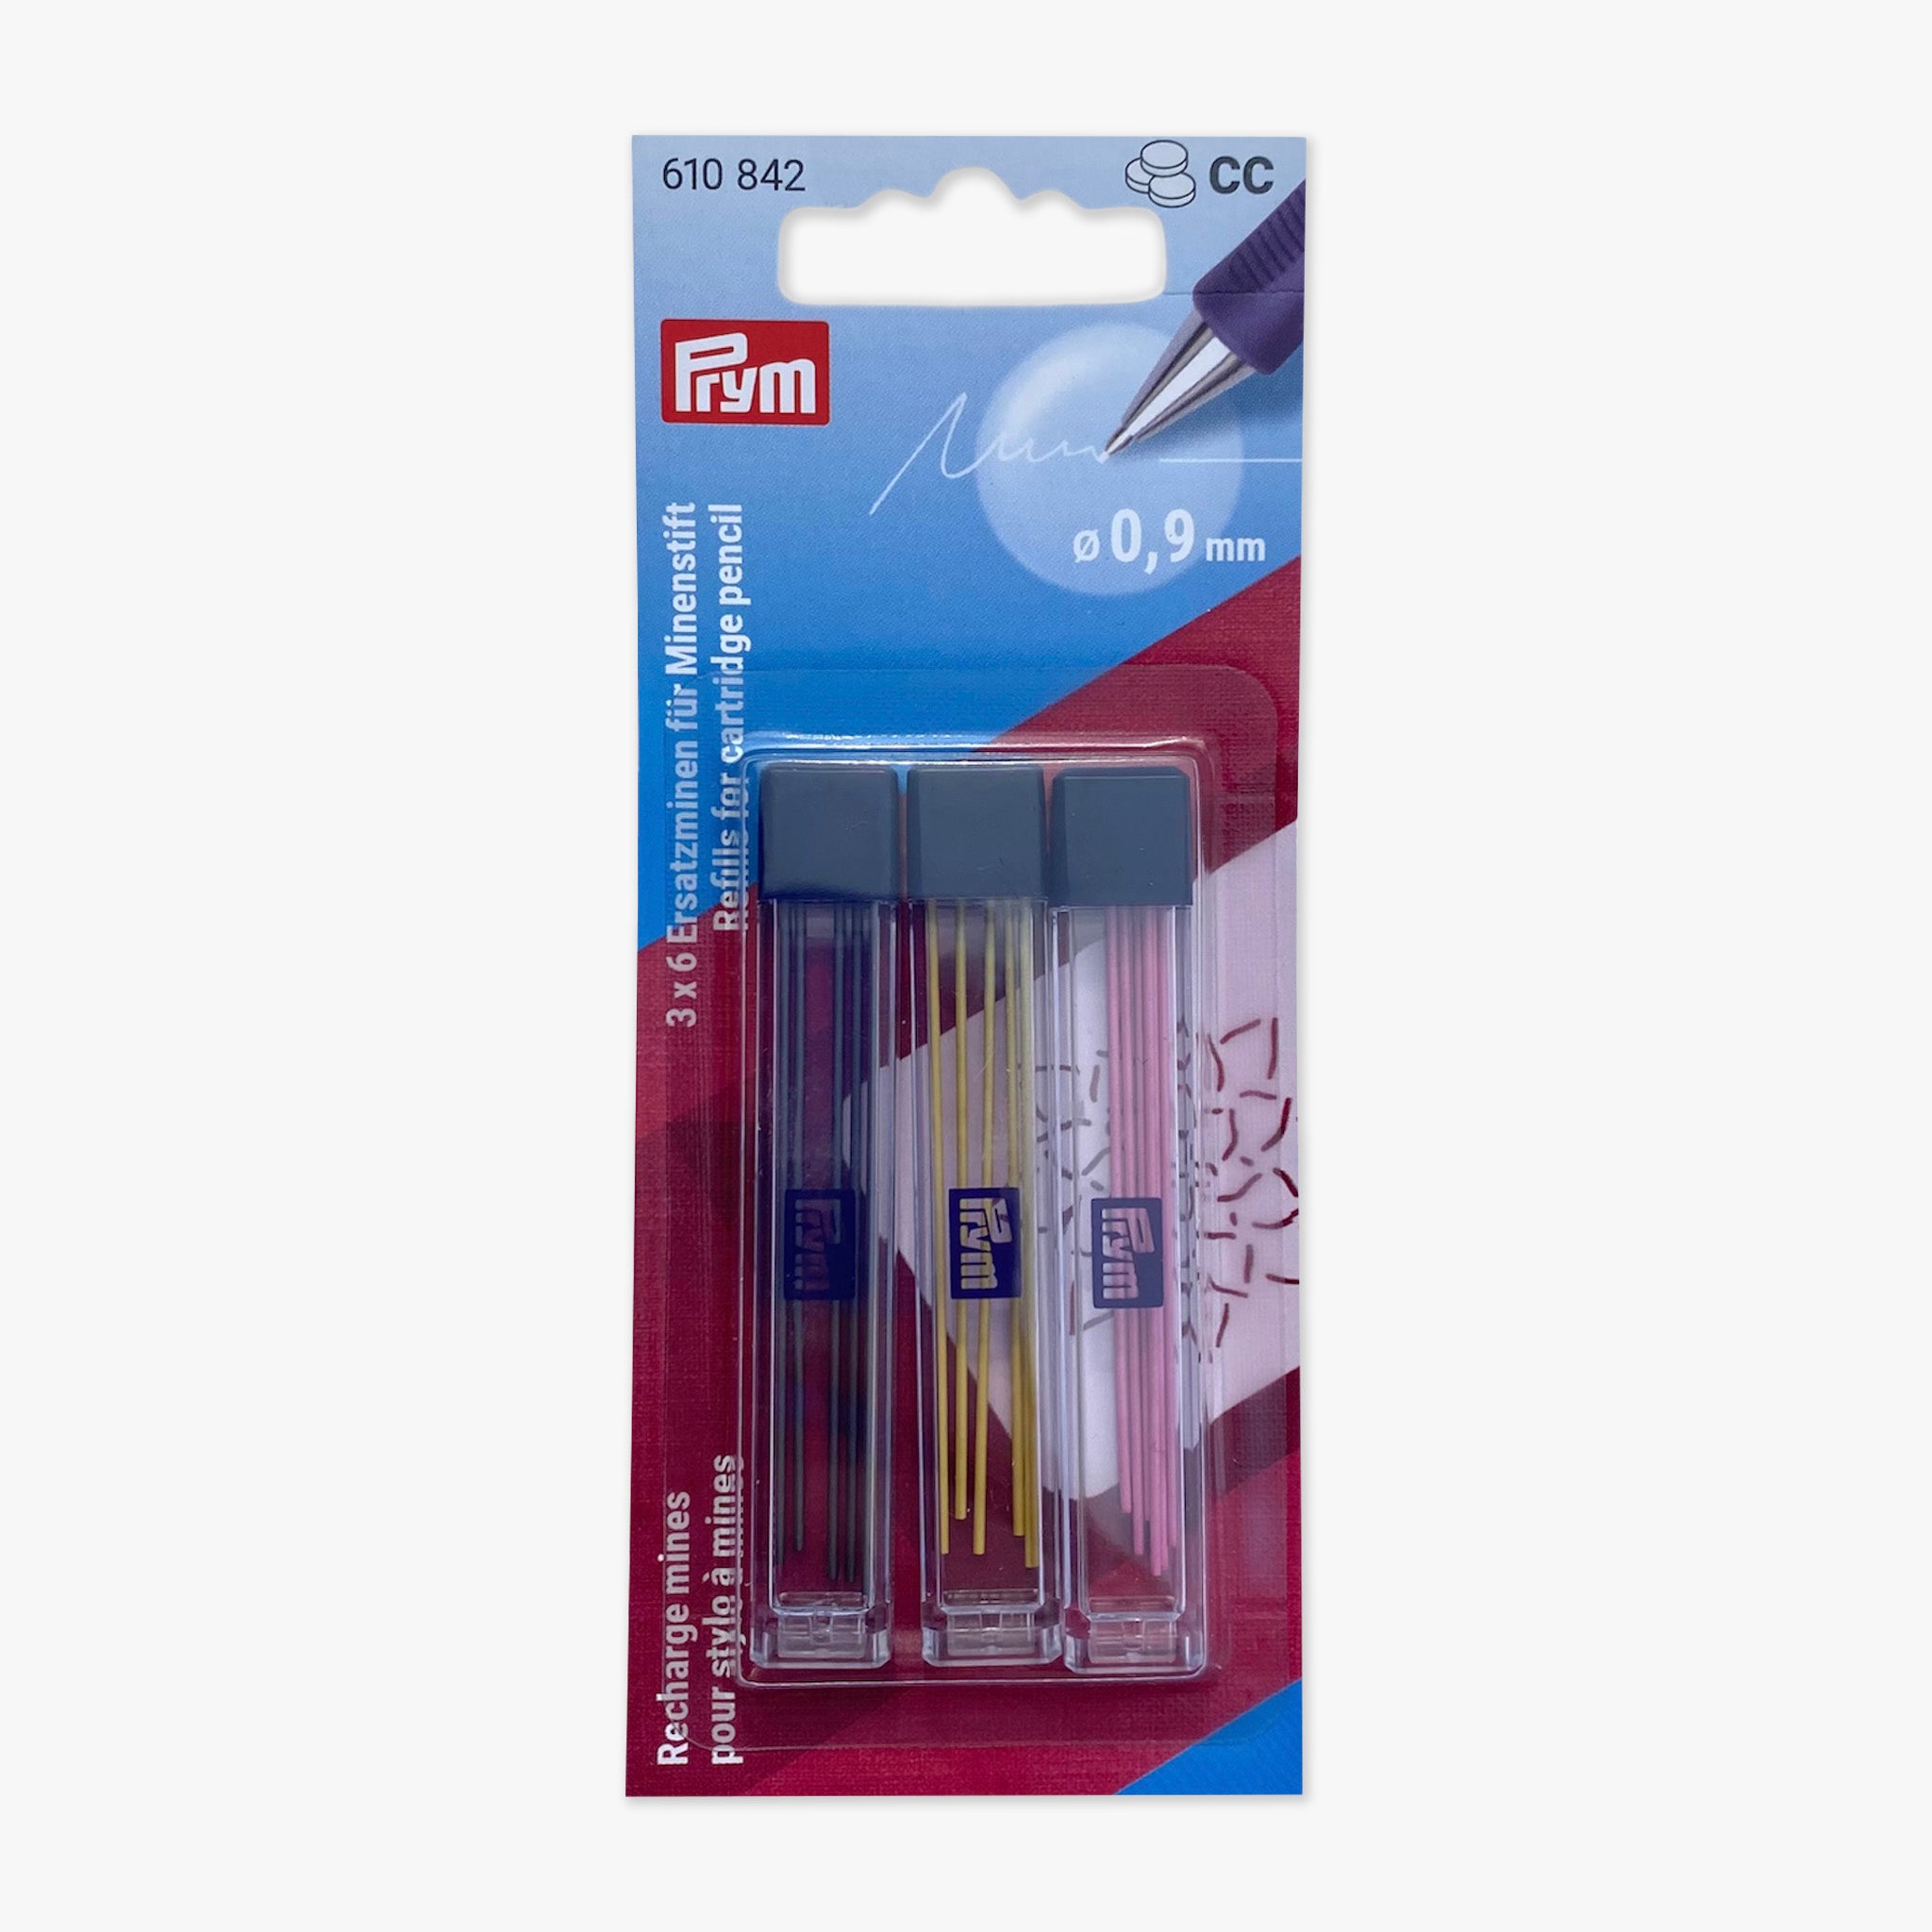 Prym | Chalk Cartridge Pencil Refills